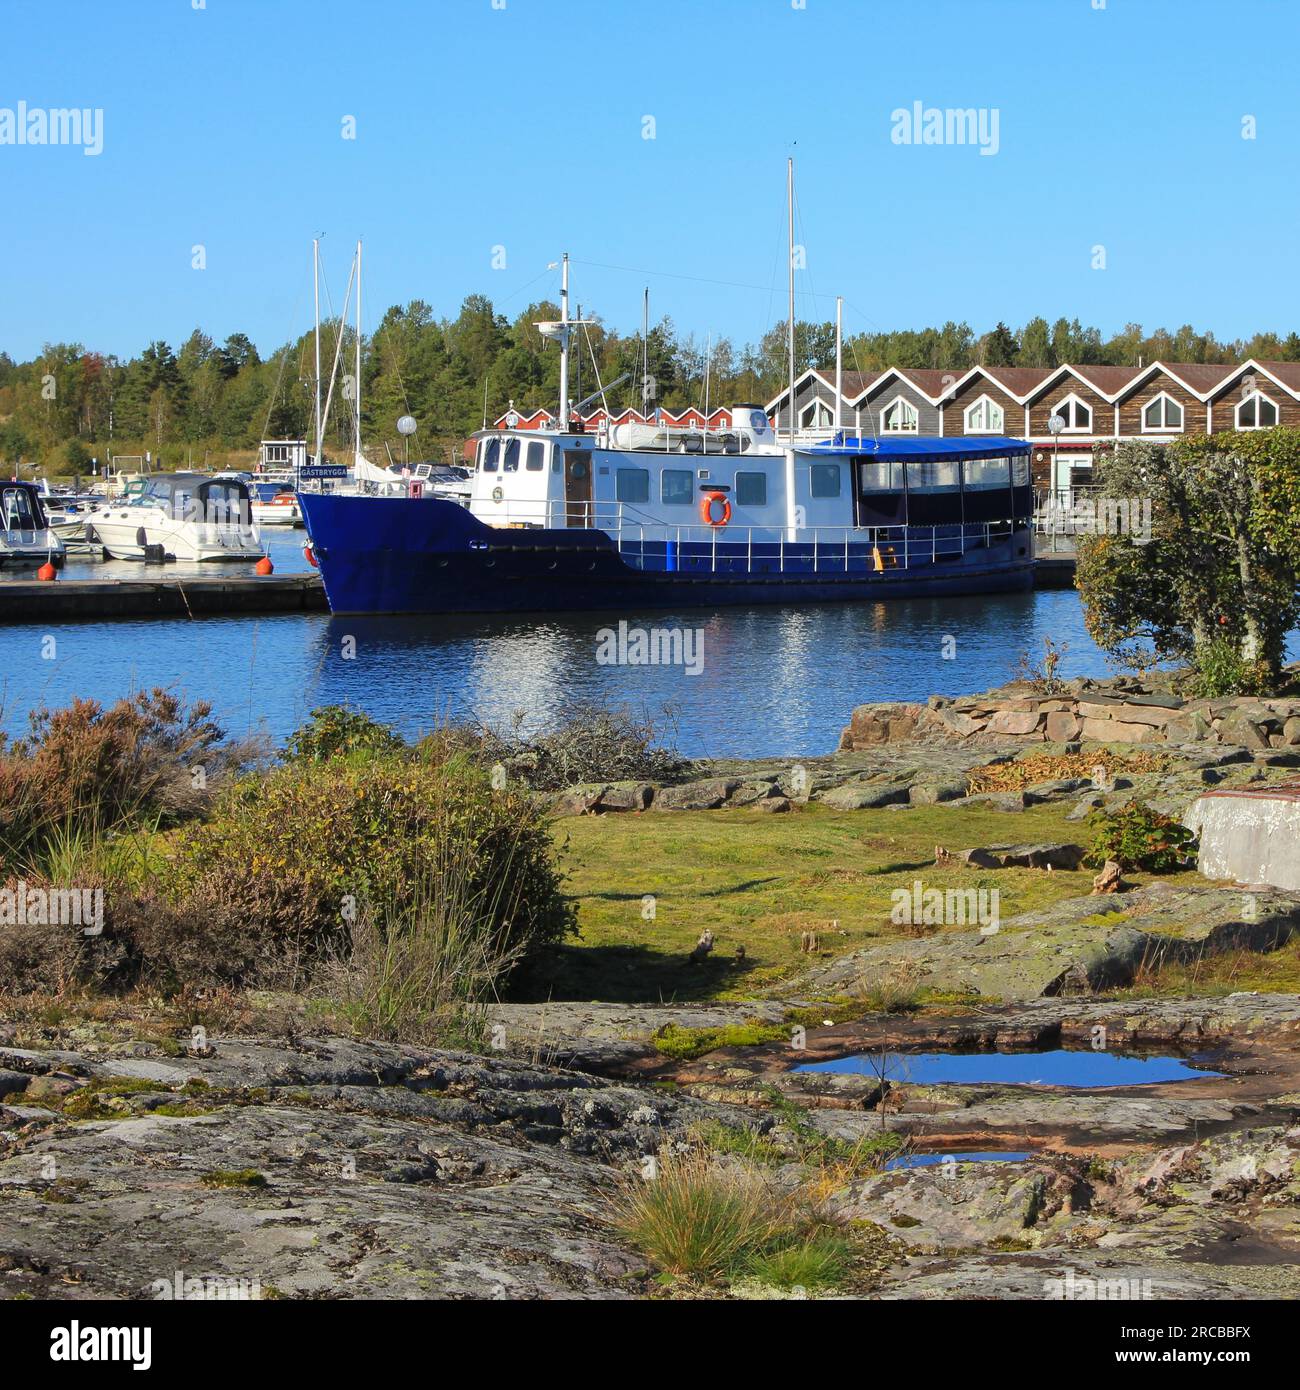 Ship in Sunnana Hamn, small harbour in Mellerud. Dalsland, Sweden Stock Photo